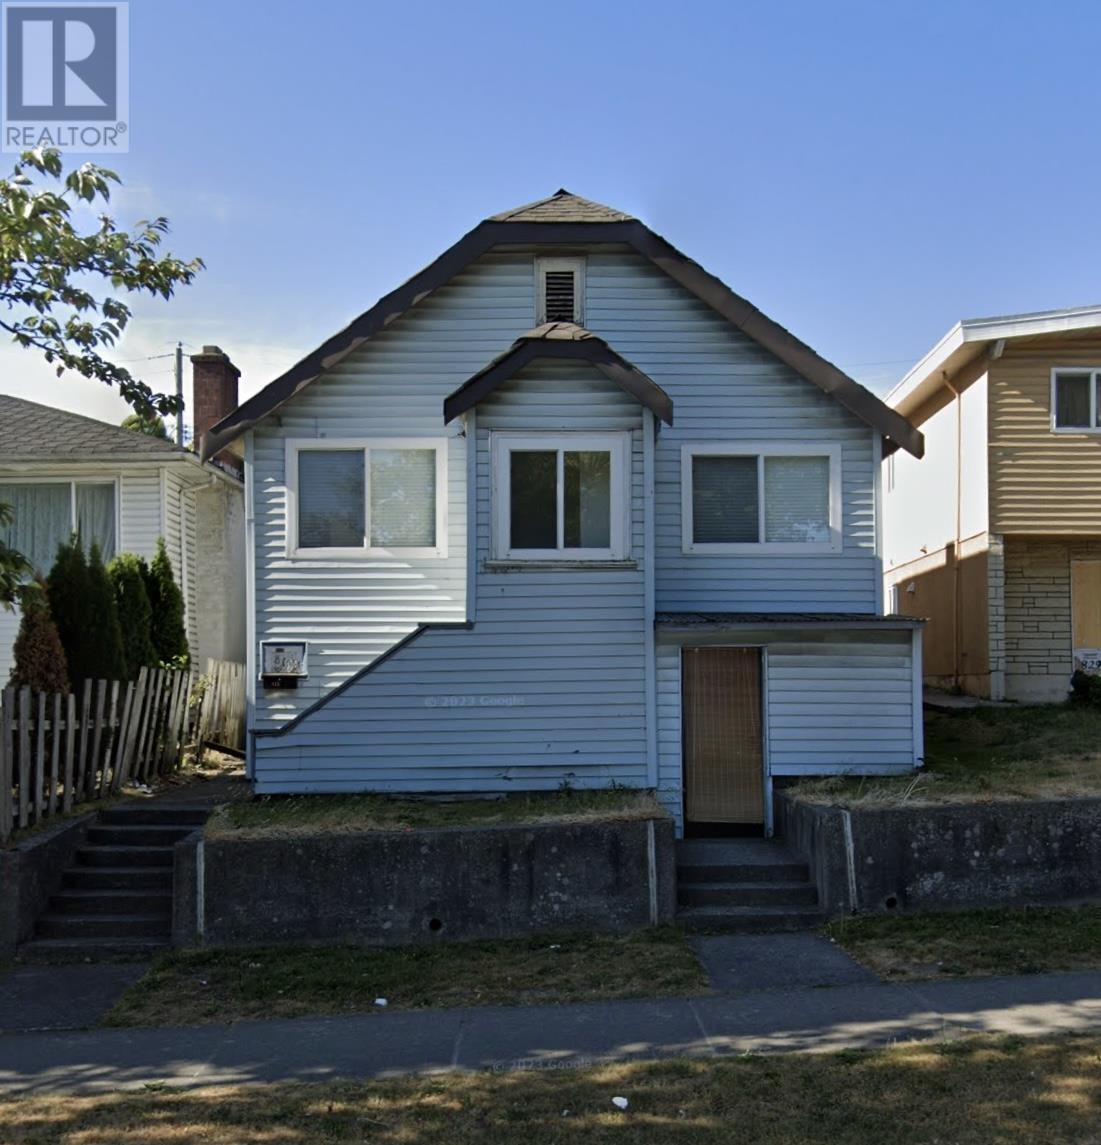 Residential Home For Sale | 815 Se Marine Drive | Vancouver | V5X2V2